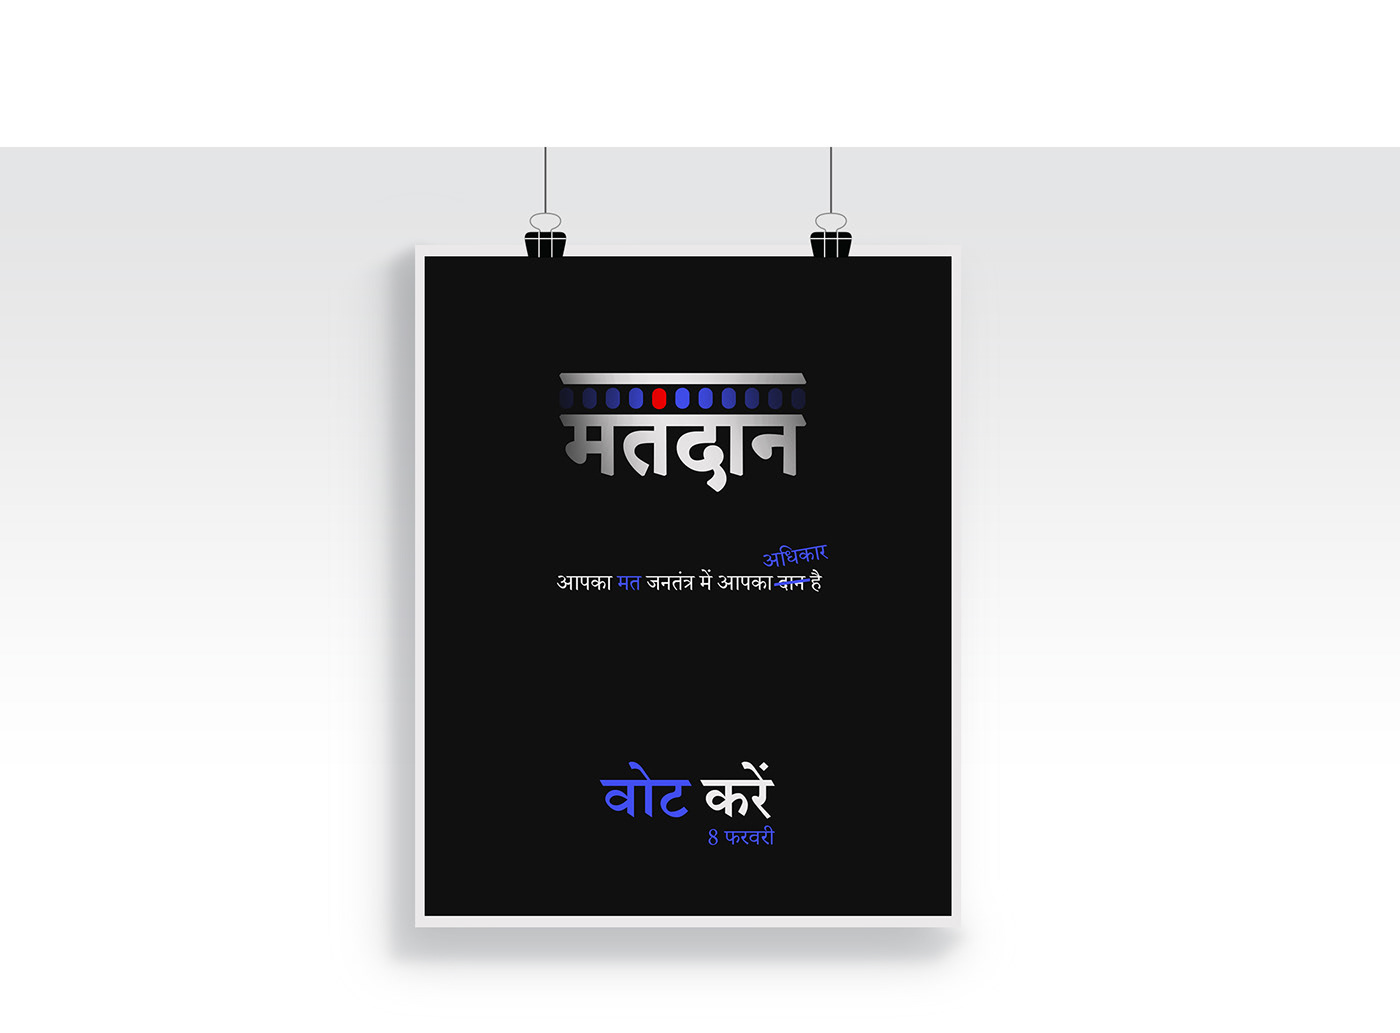 draphicon minimal posters Poster Design vote Awareness campaign Minimalism Delhi Election India Uttar Pradesh